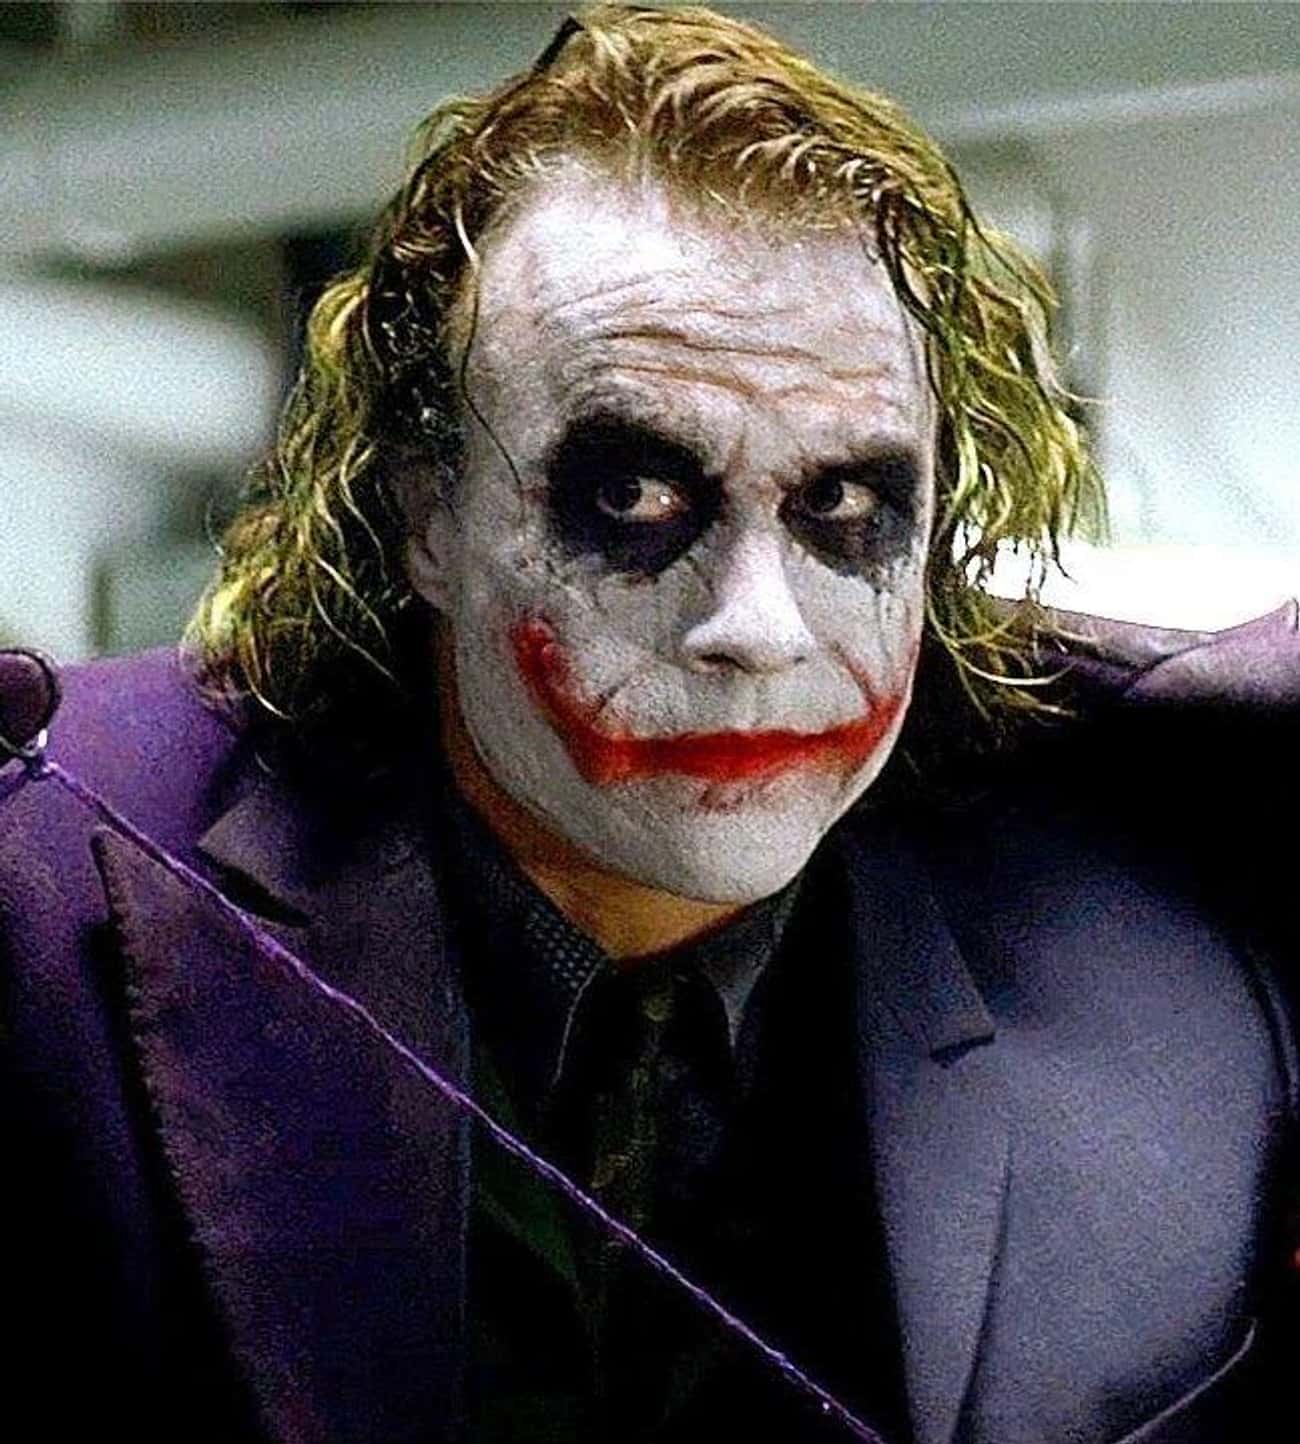 Joker Didn’t Actually Swap The Detonators